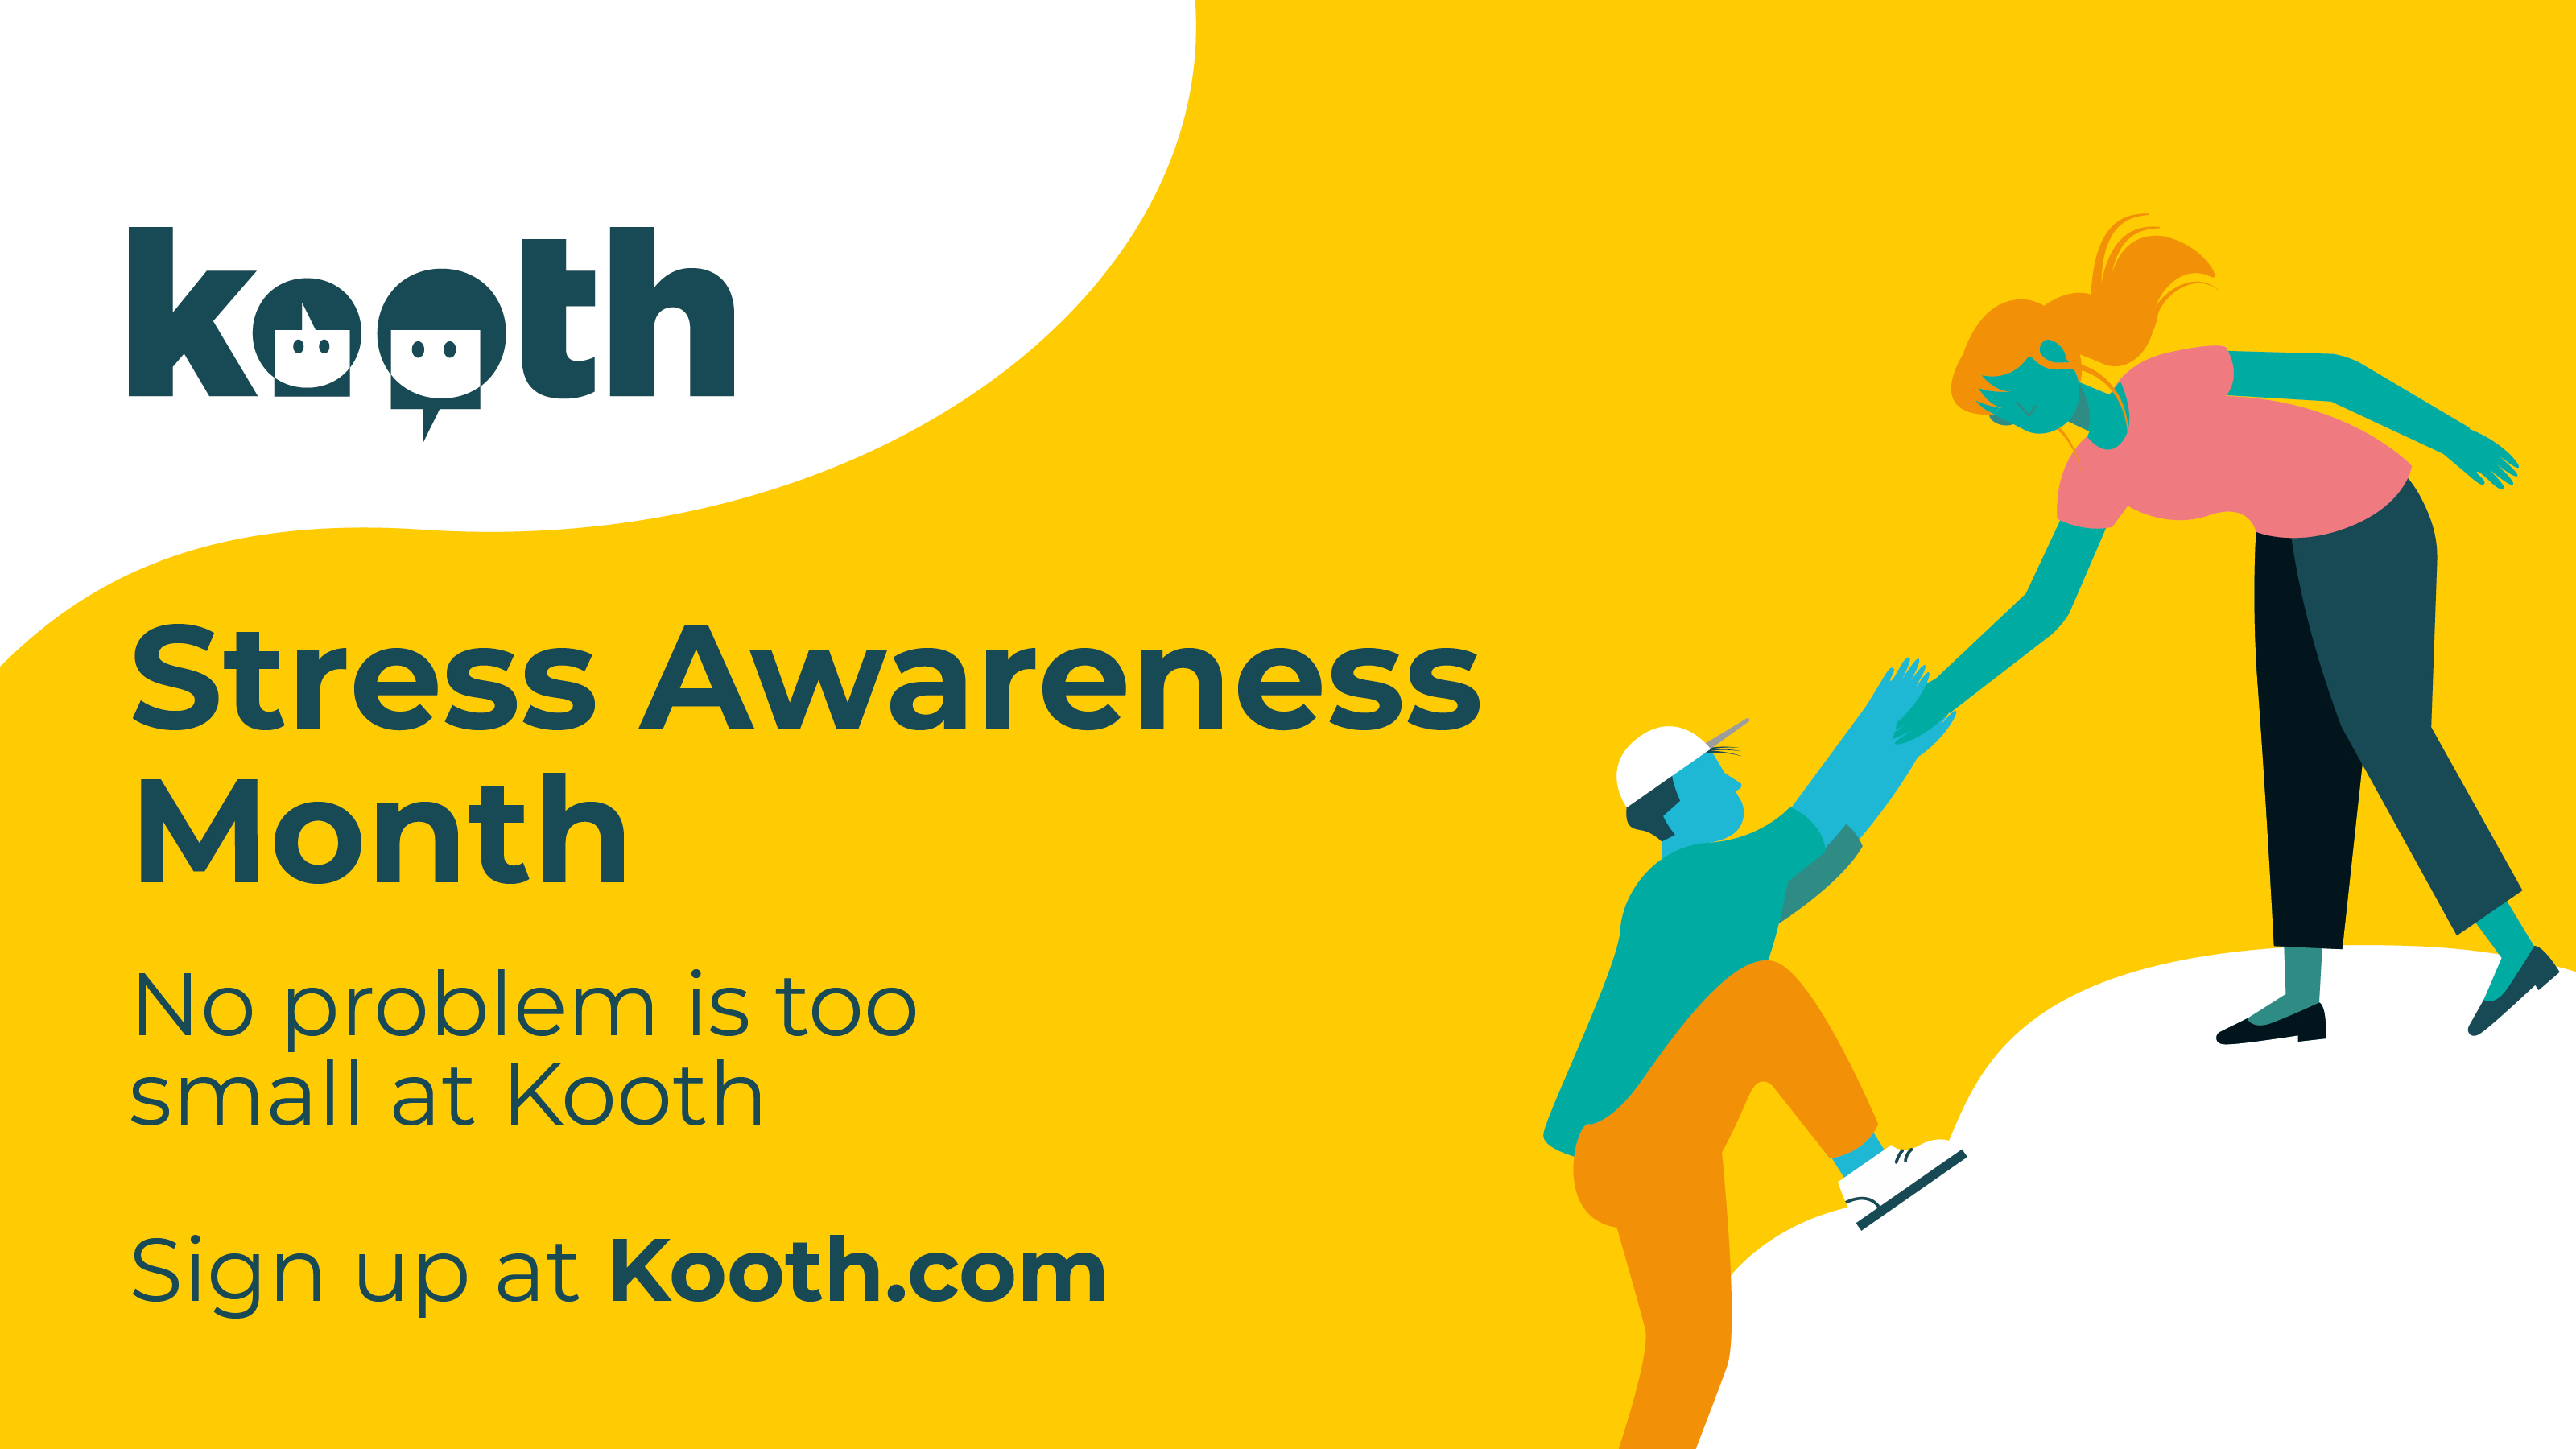 Kooth Stress awareness month image